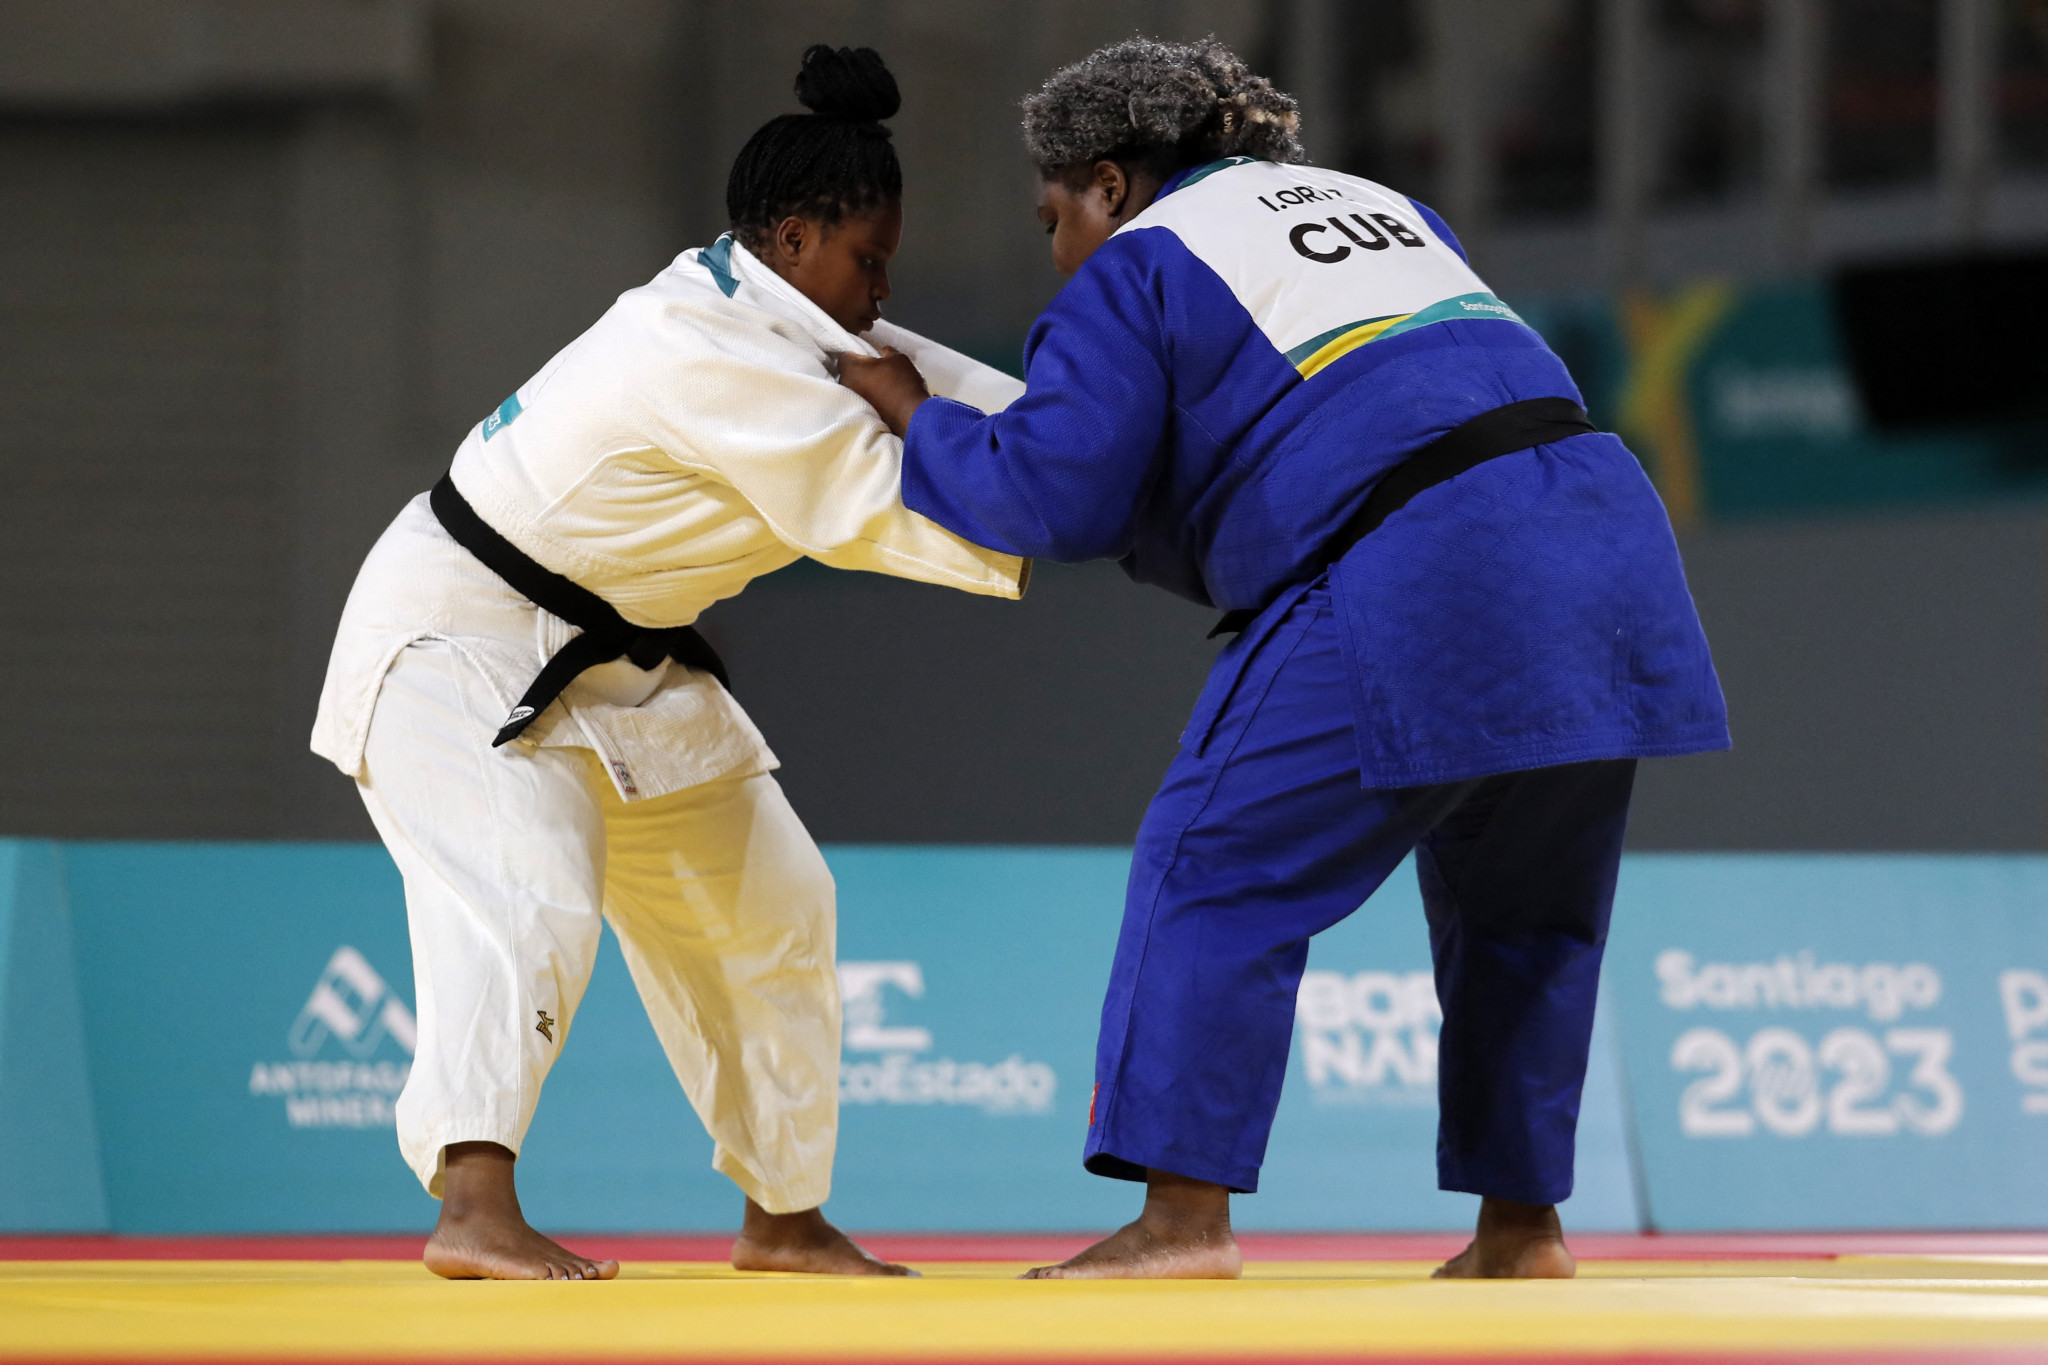 Judoka Ortíz and fencer Kiefer claim fourth consecutive Pan American Games golds